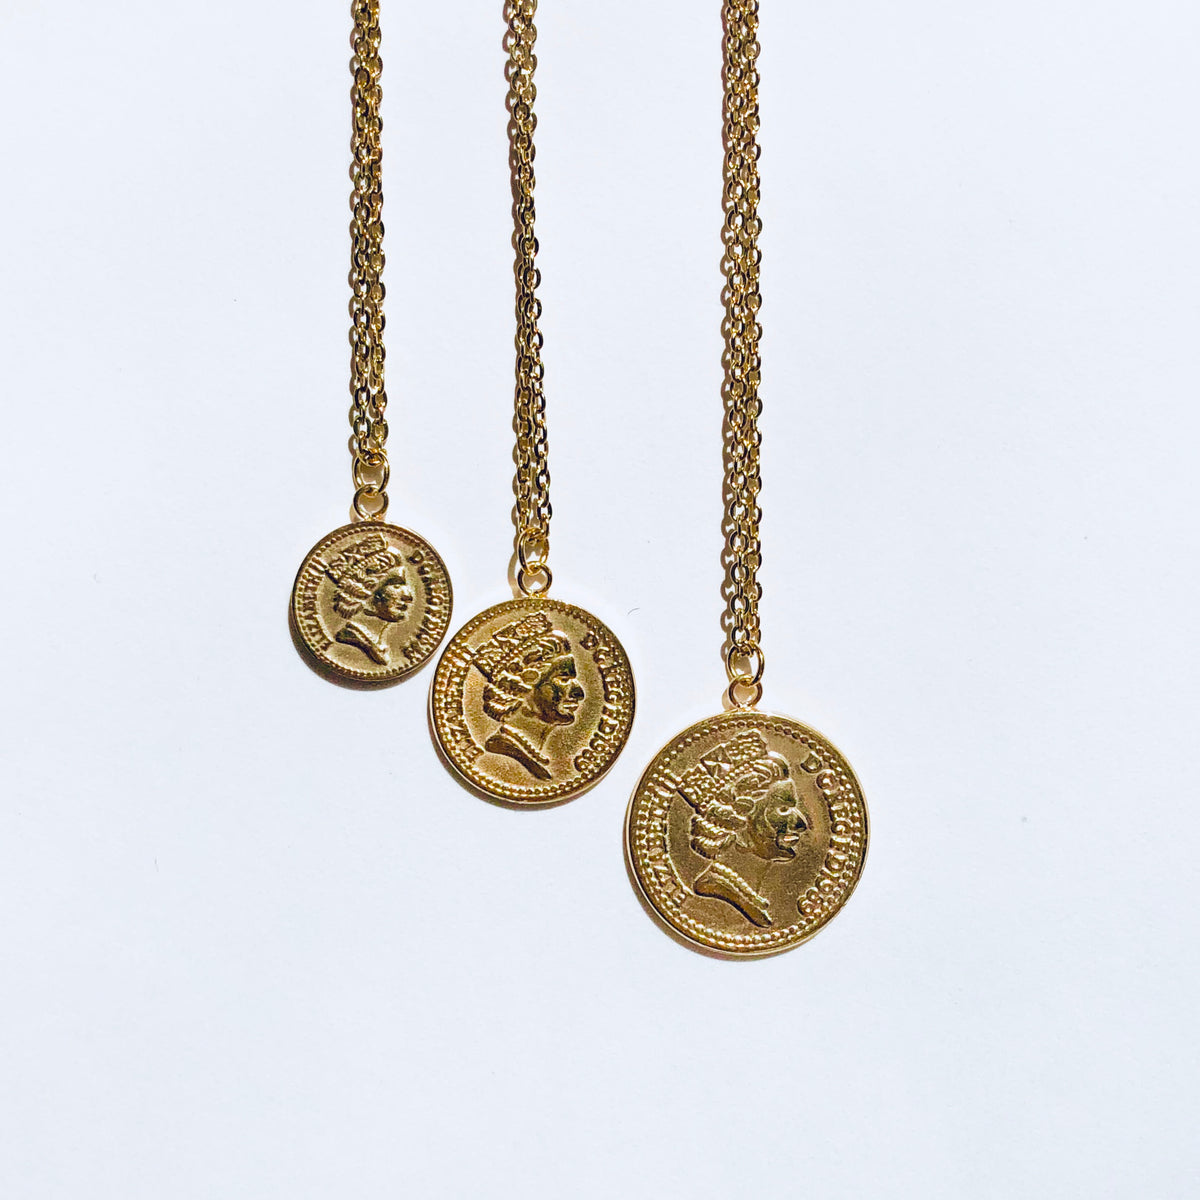 3 Tier Coin Necklace